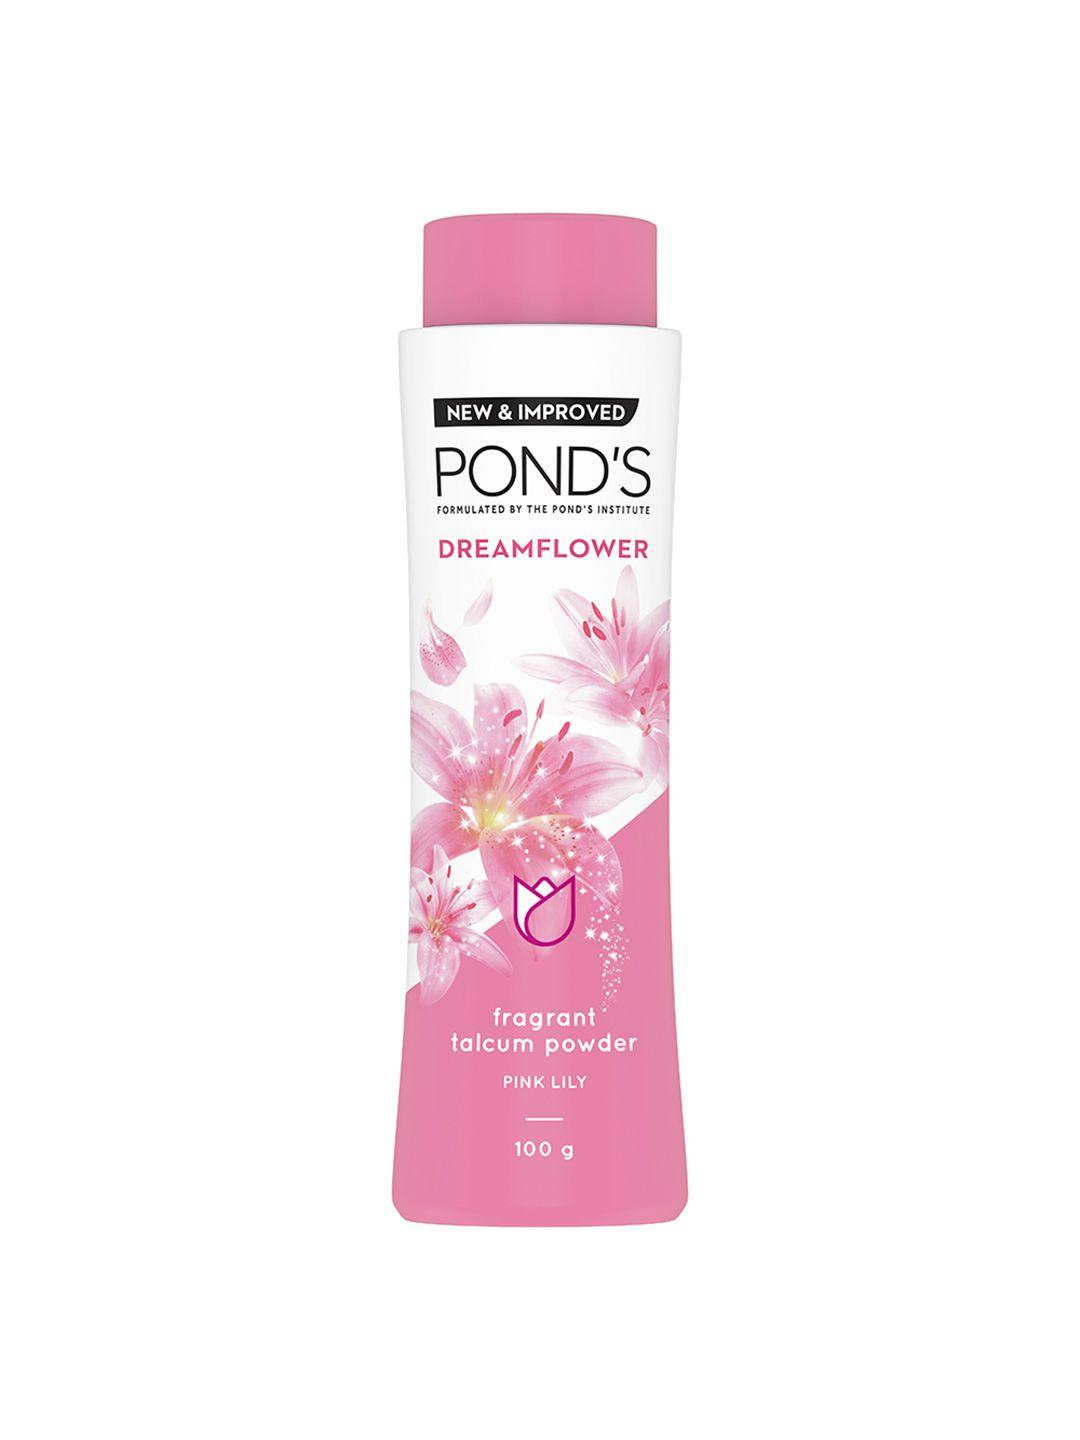 Ponds Dreamflower Fragrant Talcum Powder with Pink Lily & Vitamin B3 - 100g